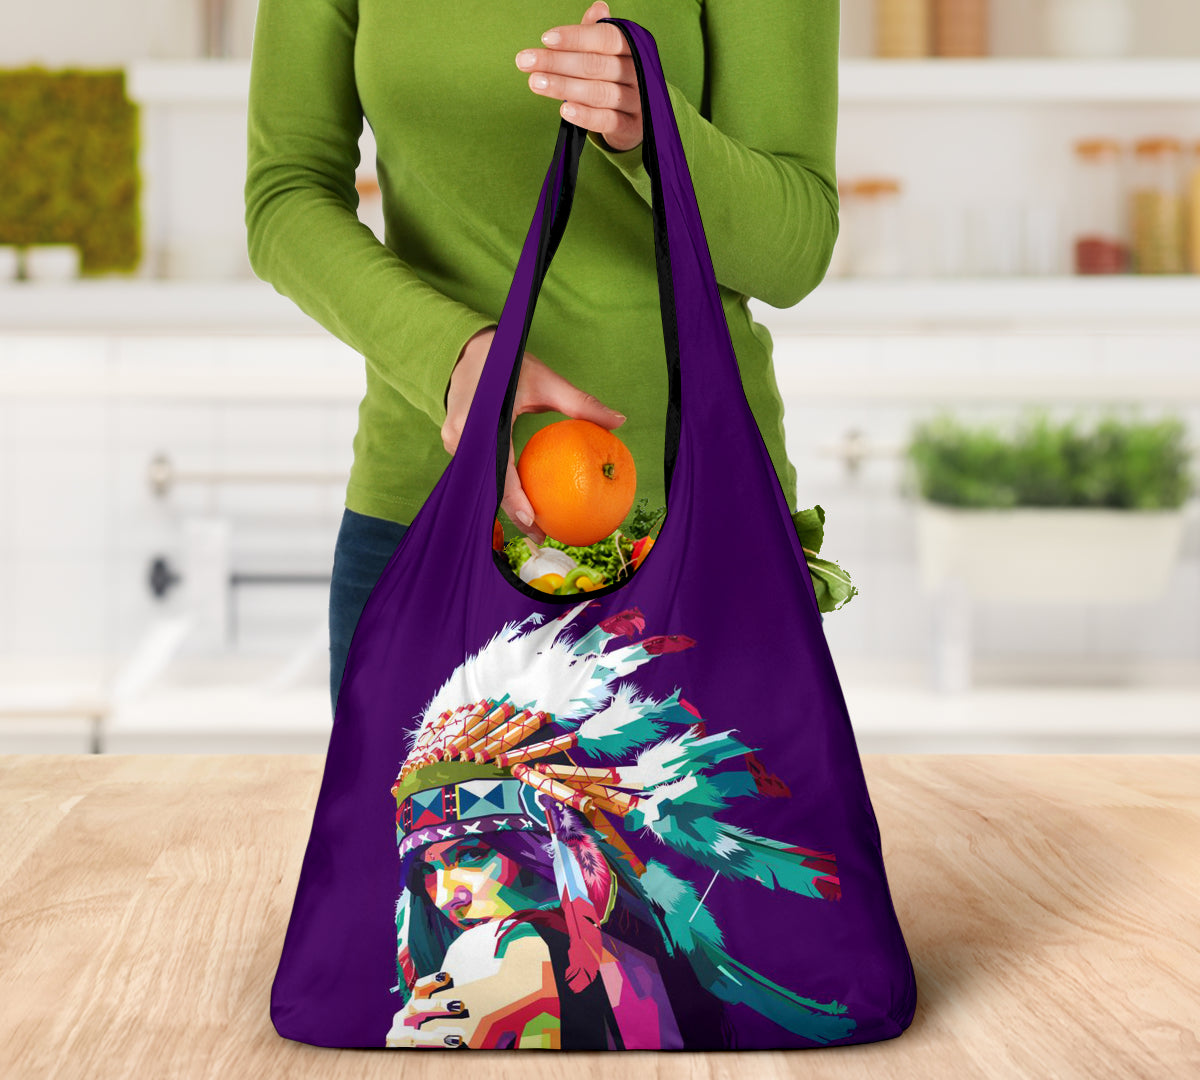 Powwow Store pattern grocery bag 3 pack set 4